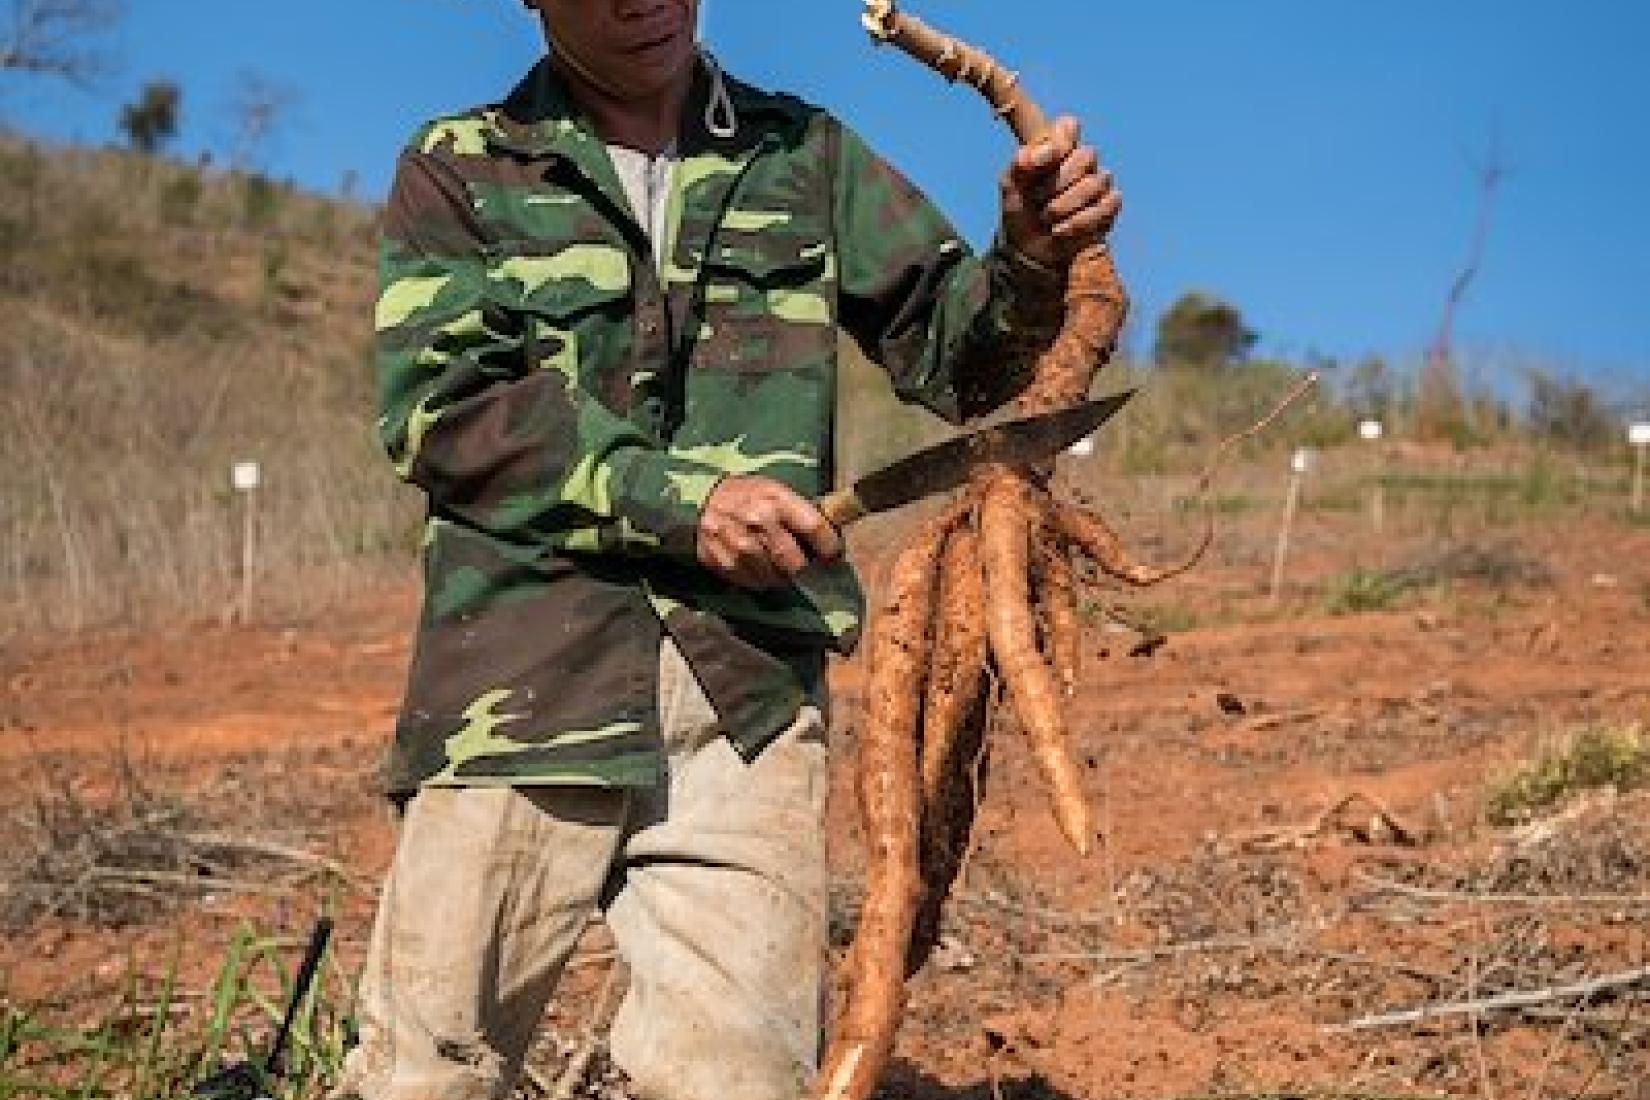 Luong Van Non, a smallholder farmer in Sơn La Province, harvesting cassava.